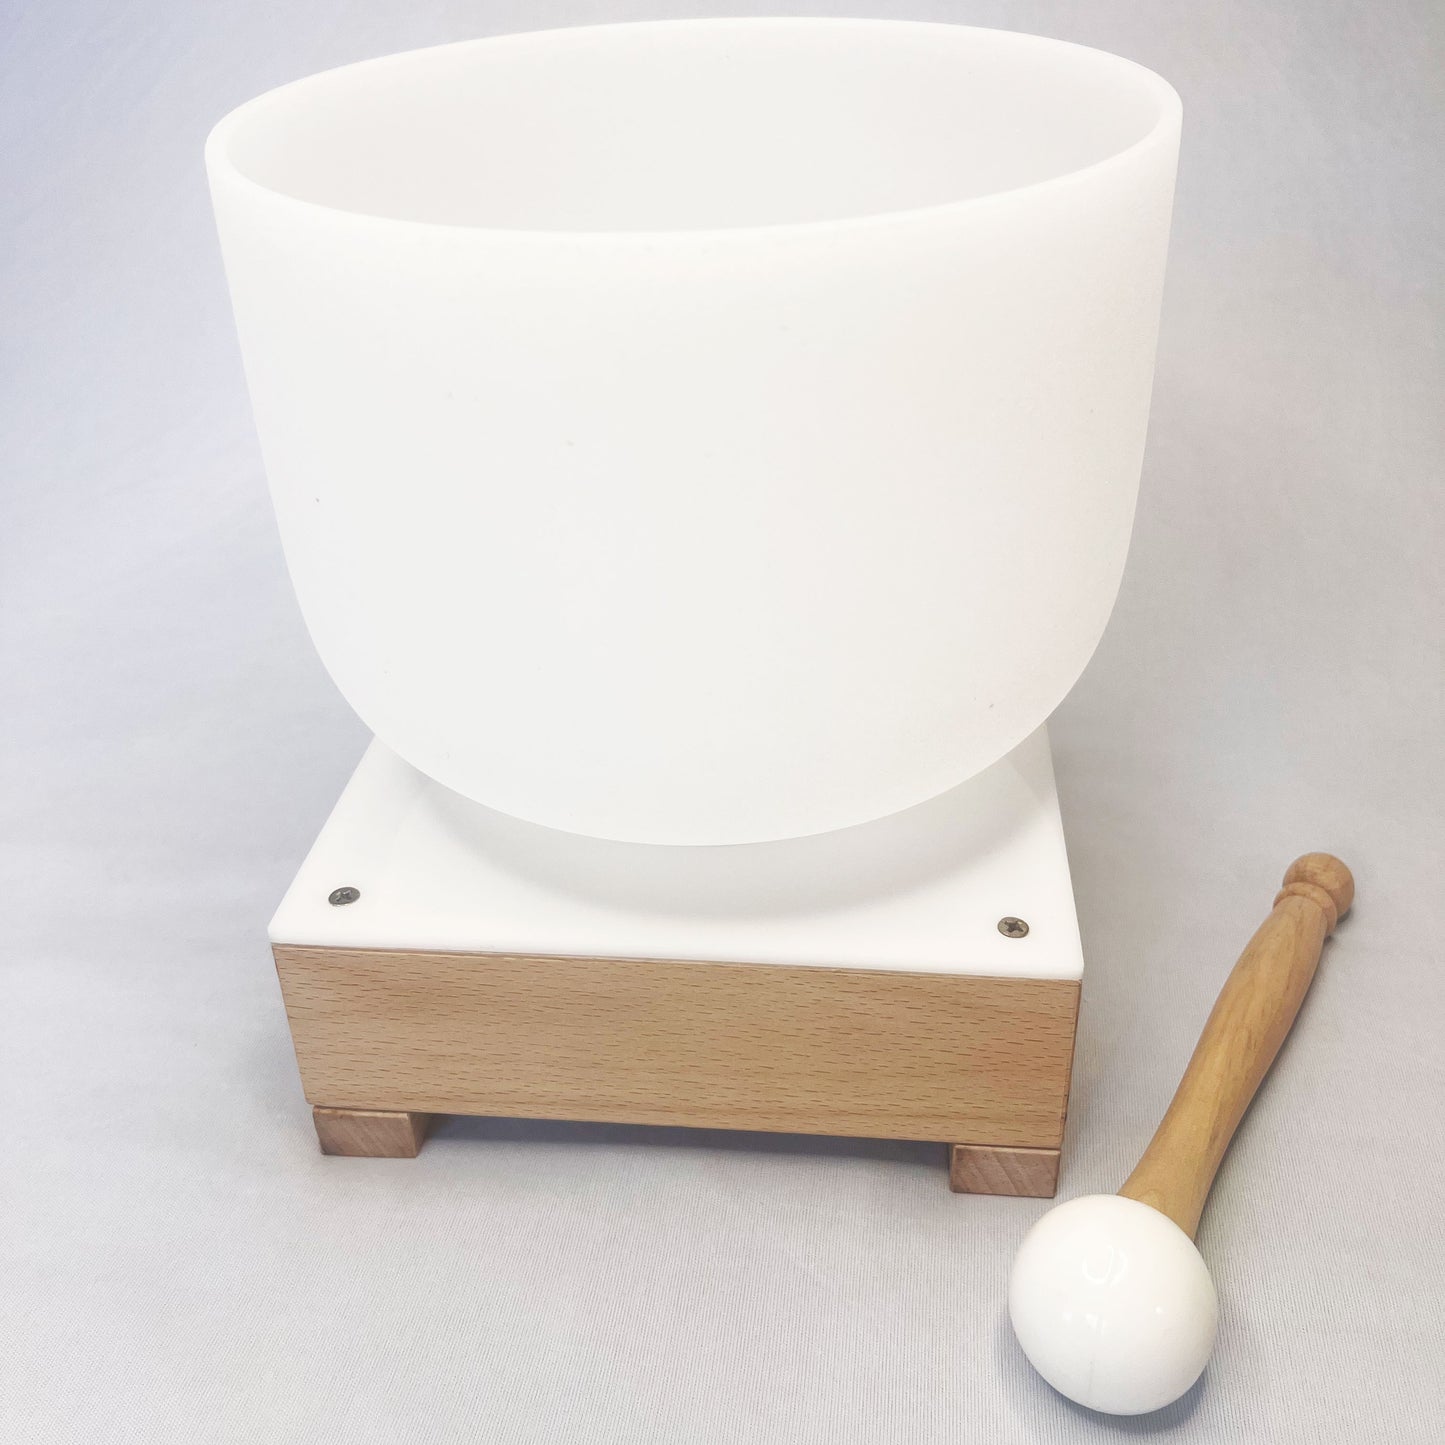 Vibra bowl – Quartz bowl and Feeelingbase